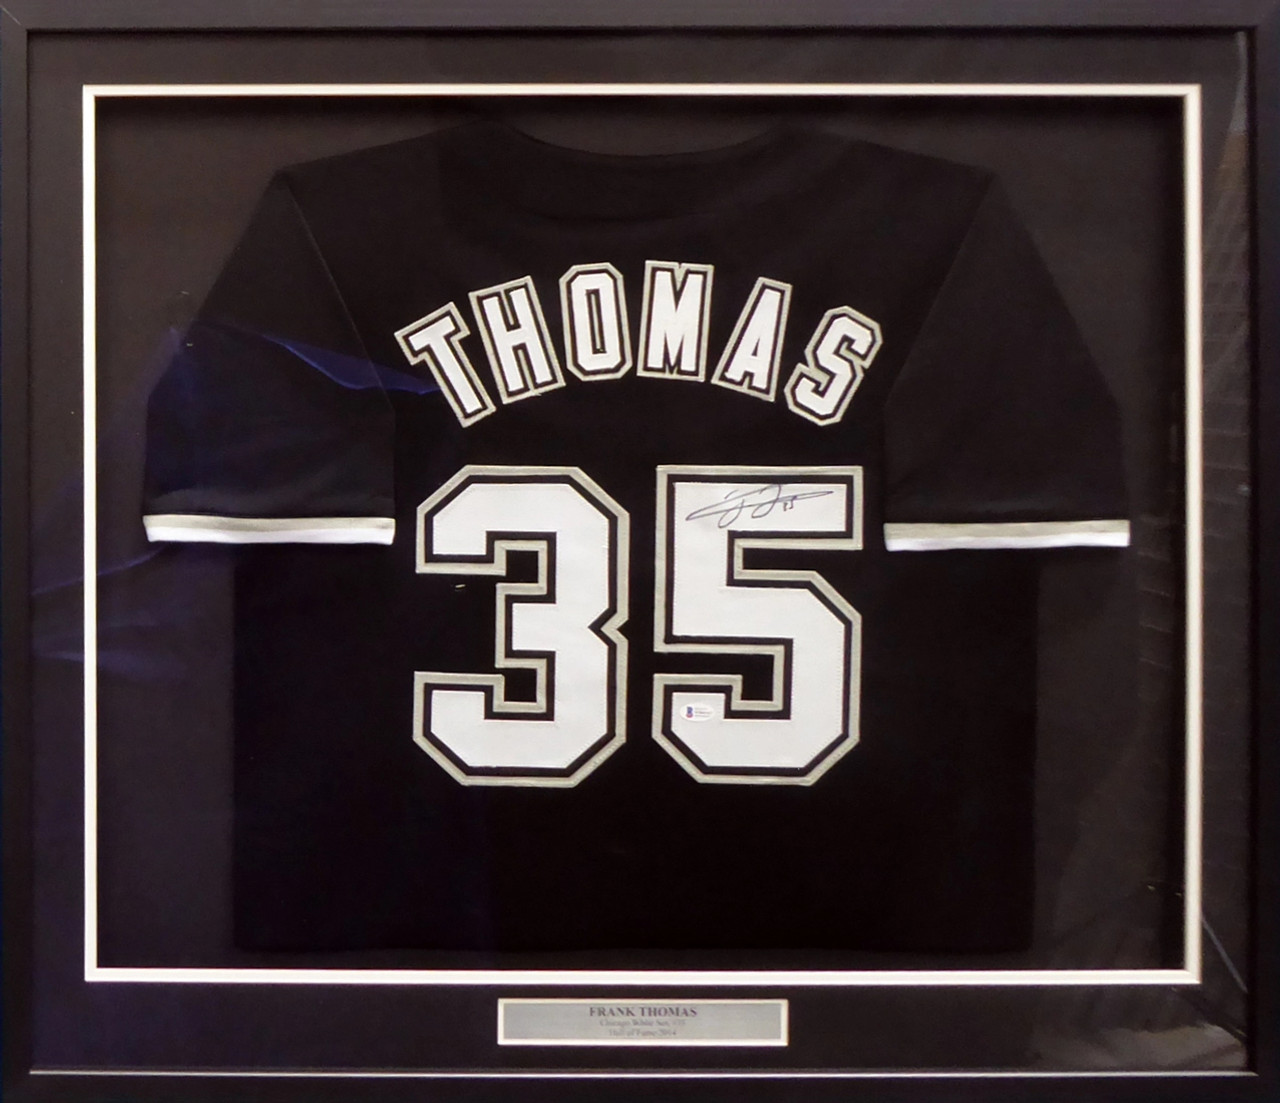 Frank Thomas Autographed Chicago Custom Black Baseball Jersey - BAS COA